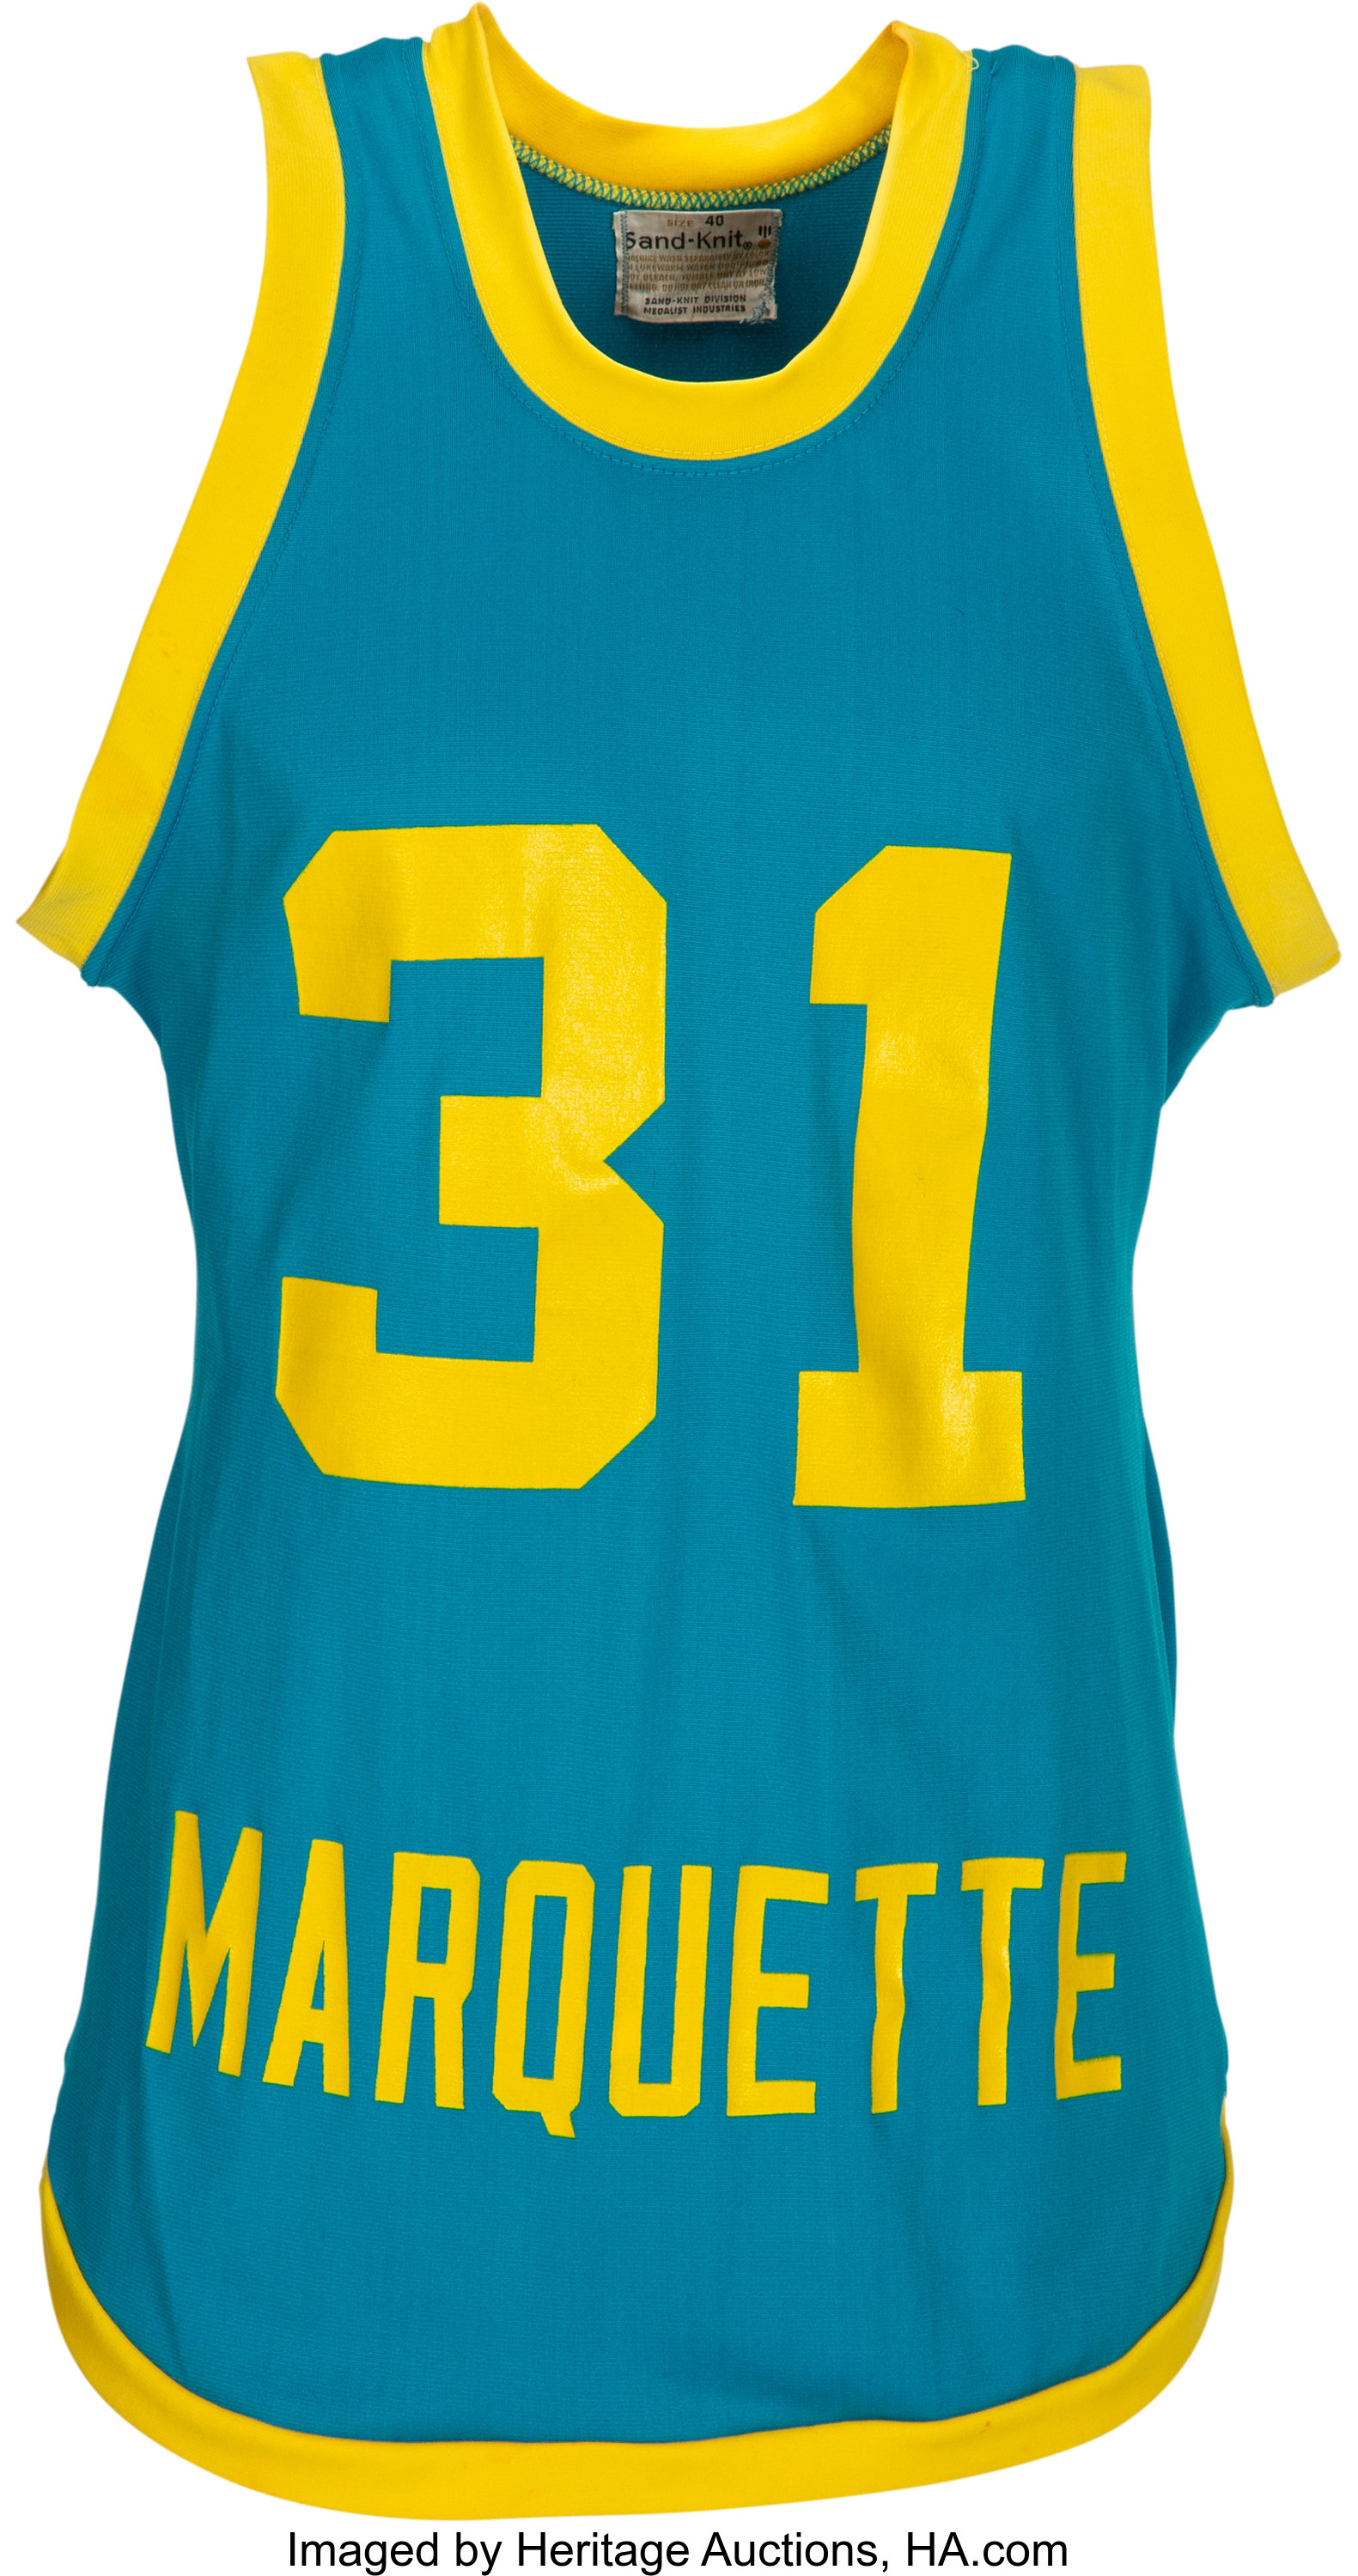 Greska: Marquette's new Jordan uniforms are, well, it's